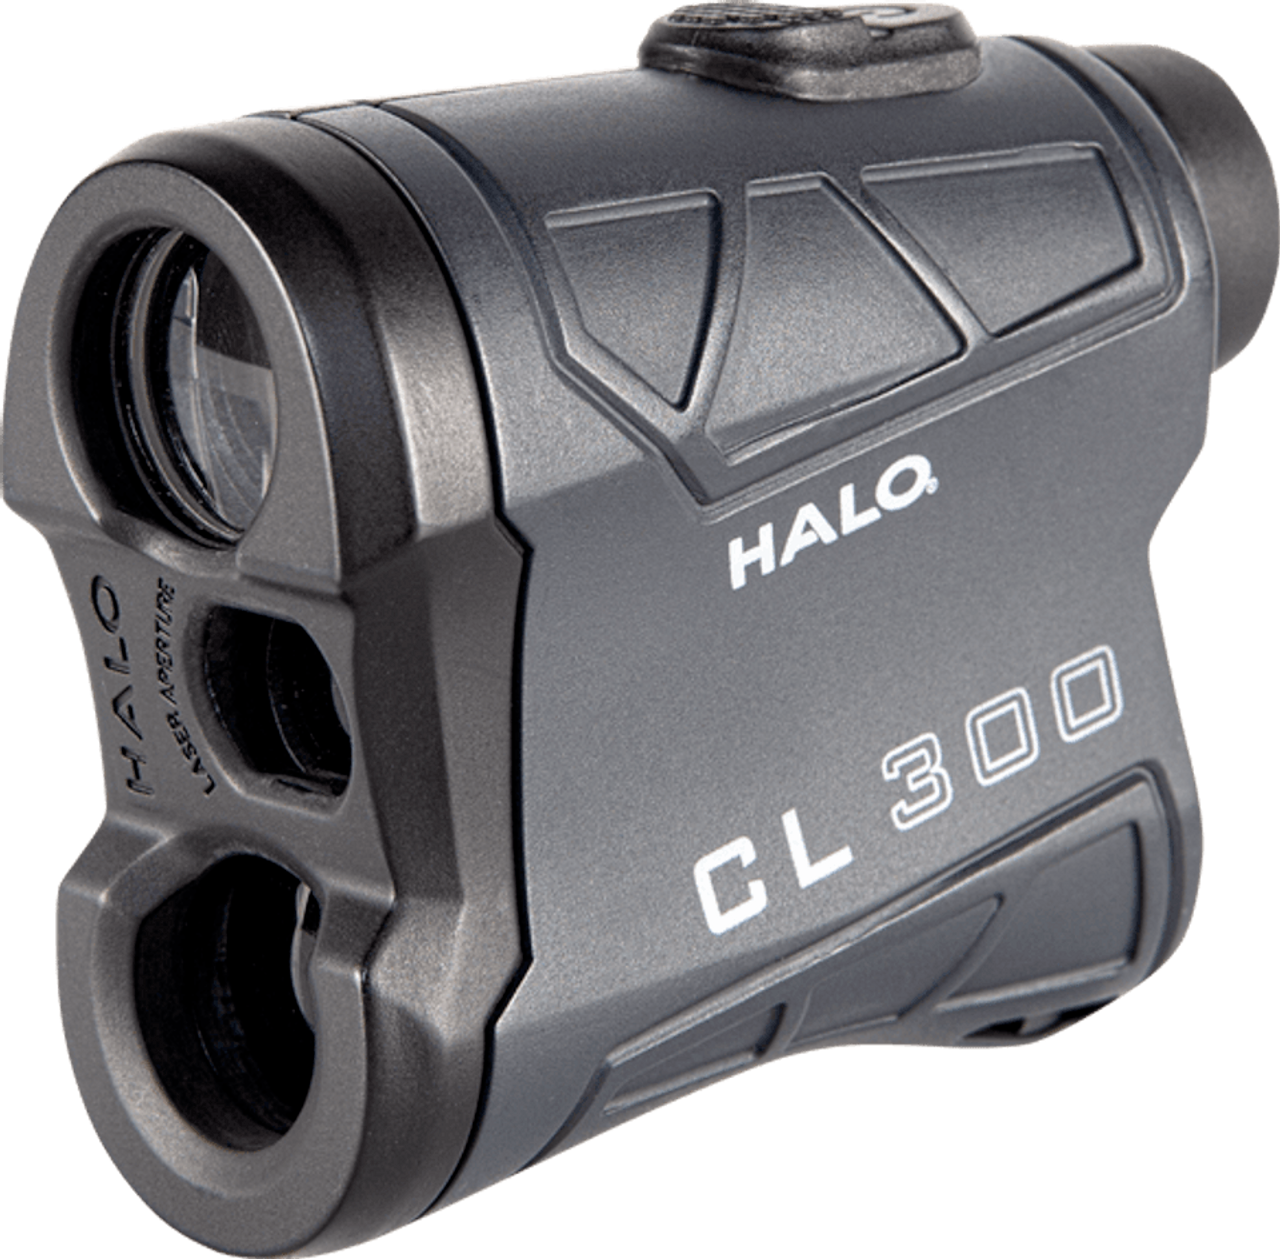 Halo CL300 Rangefinder, 300 Yard Range To Tree, 5X Magnification, Black